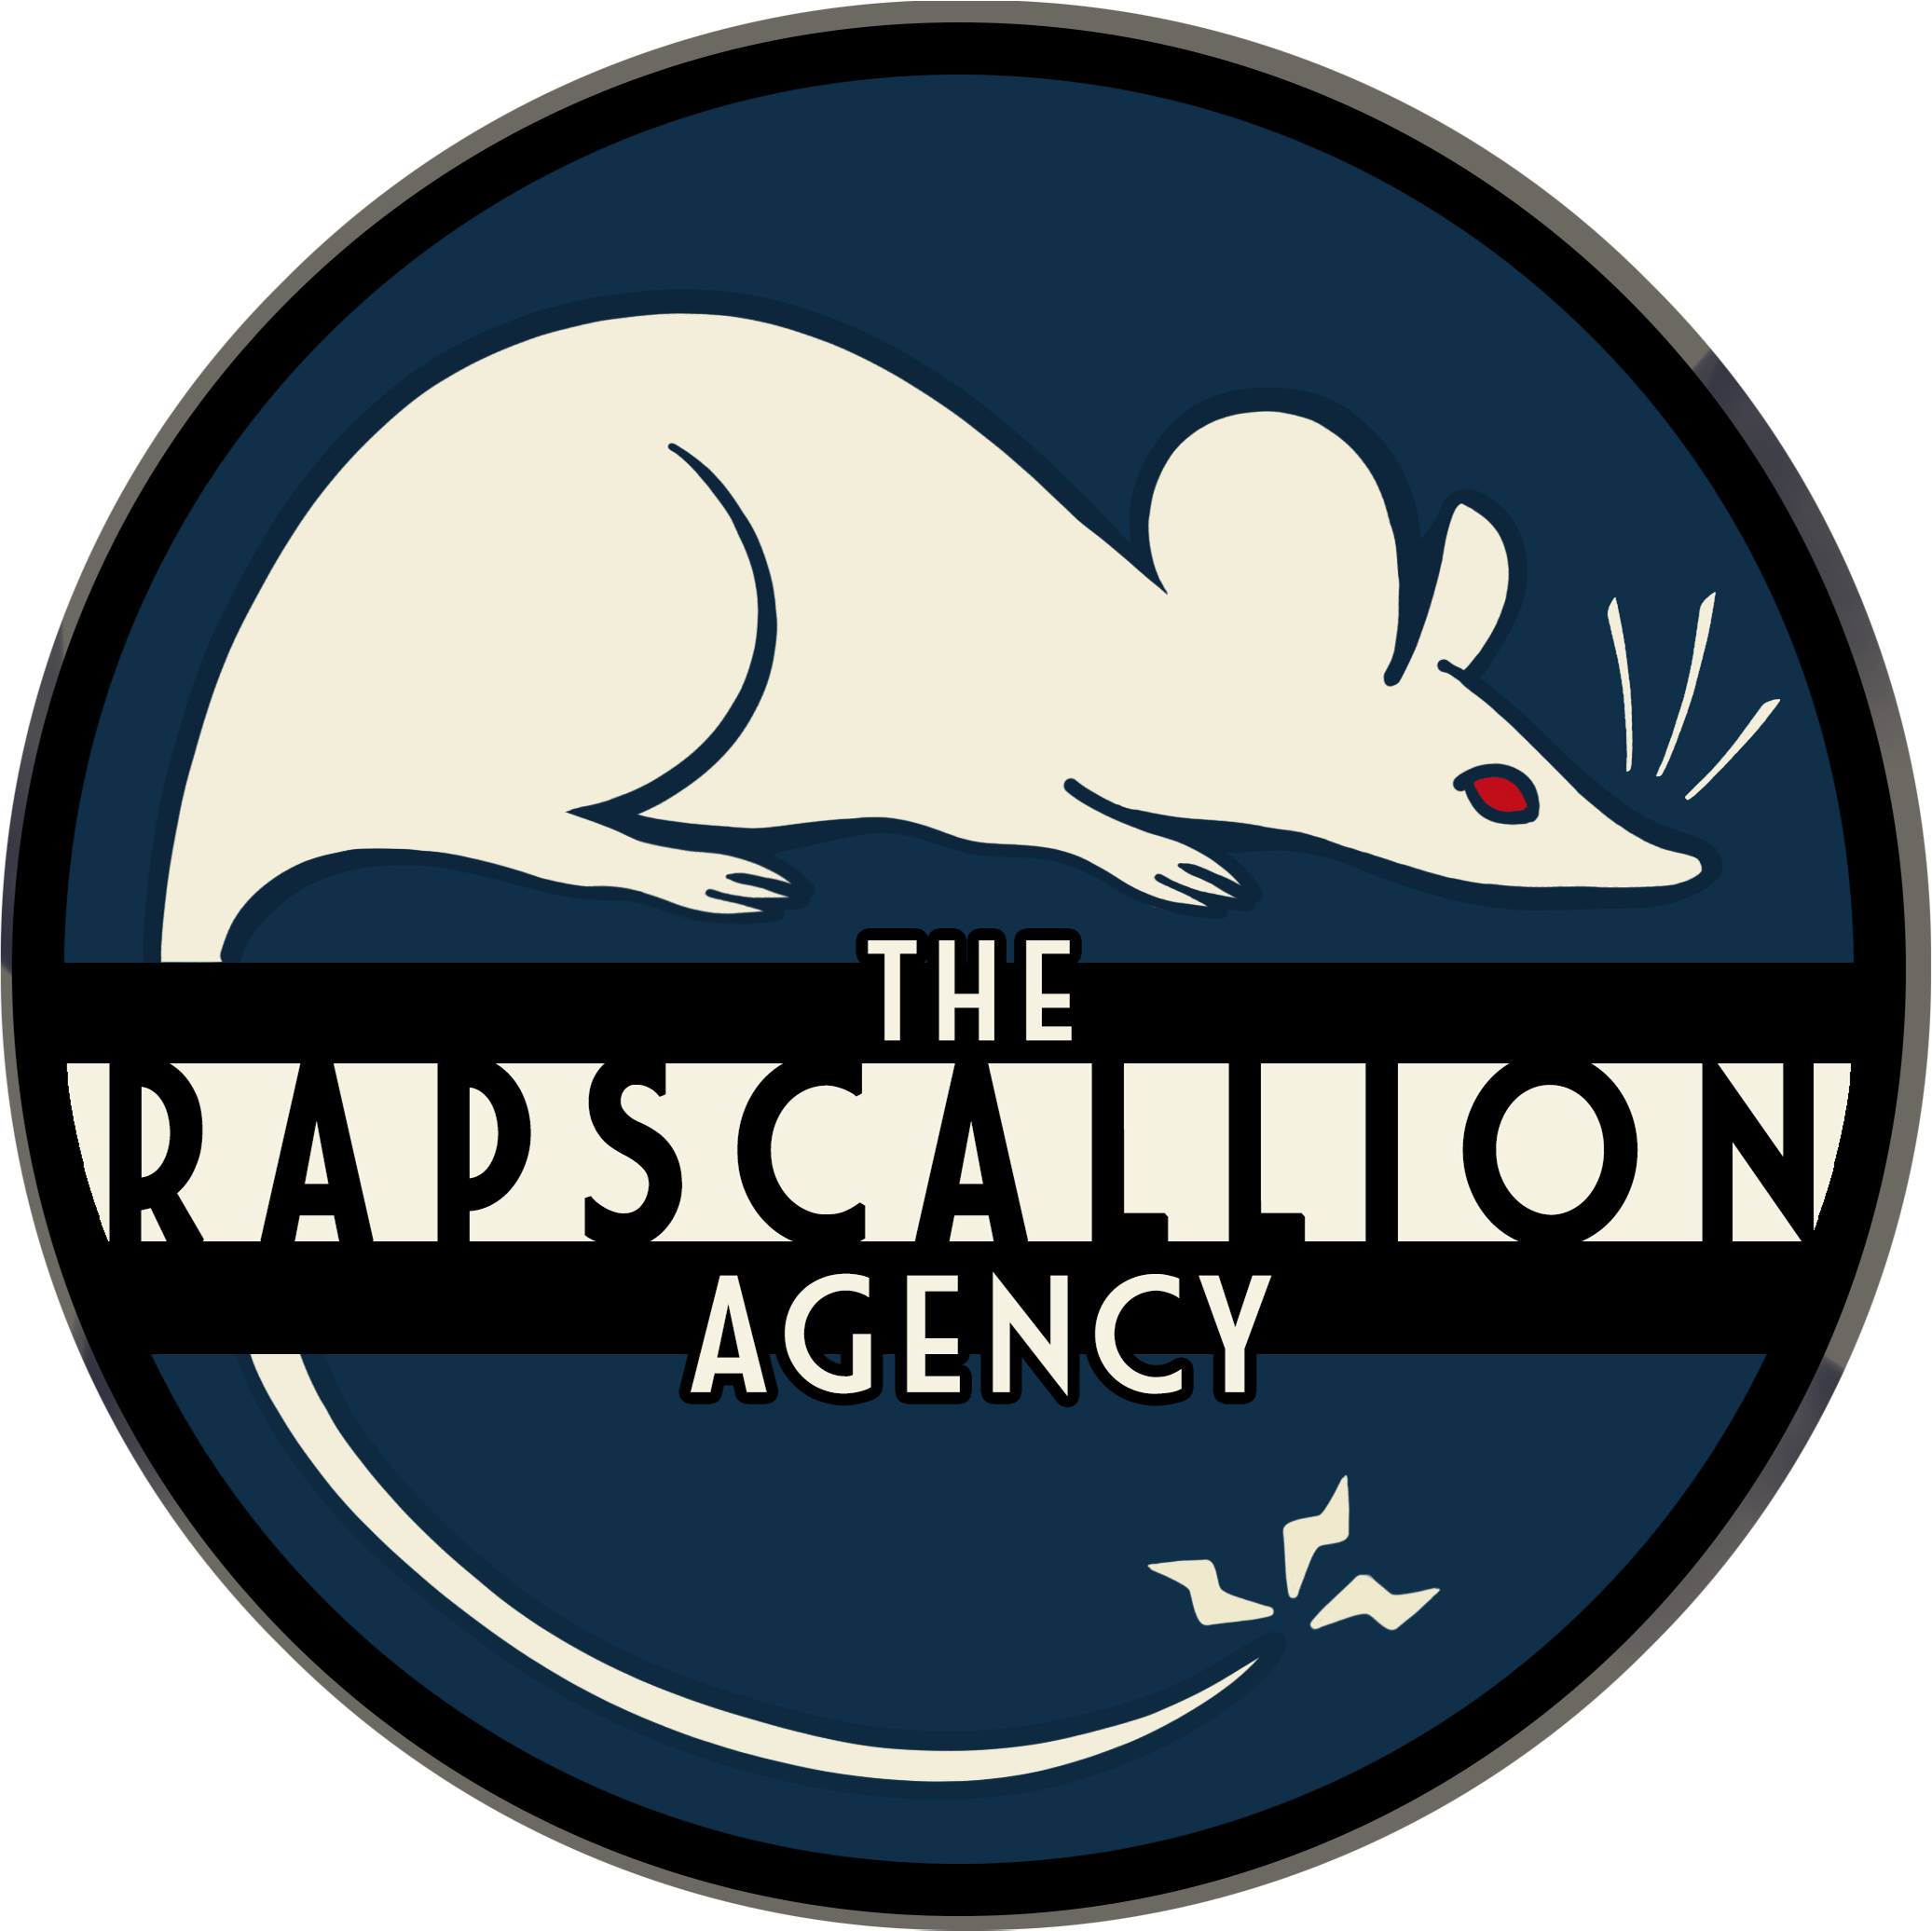 The Rapscallion Agency